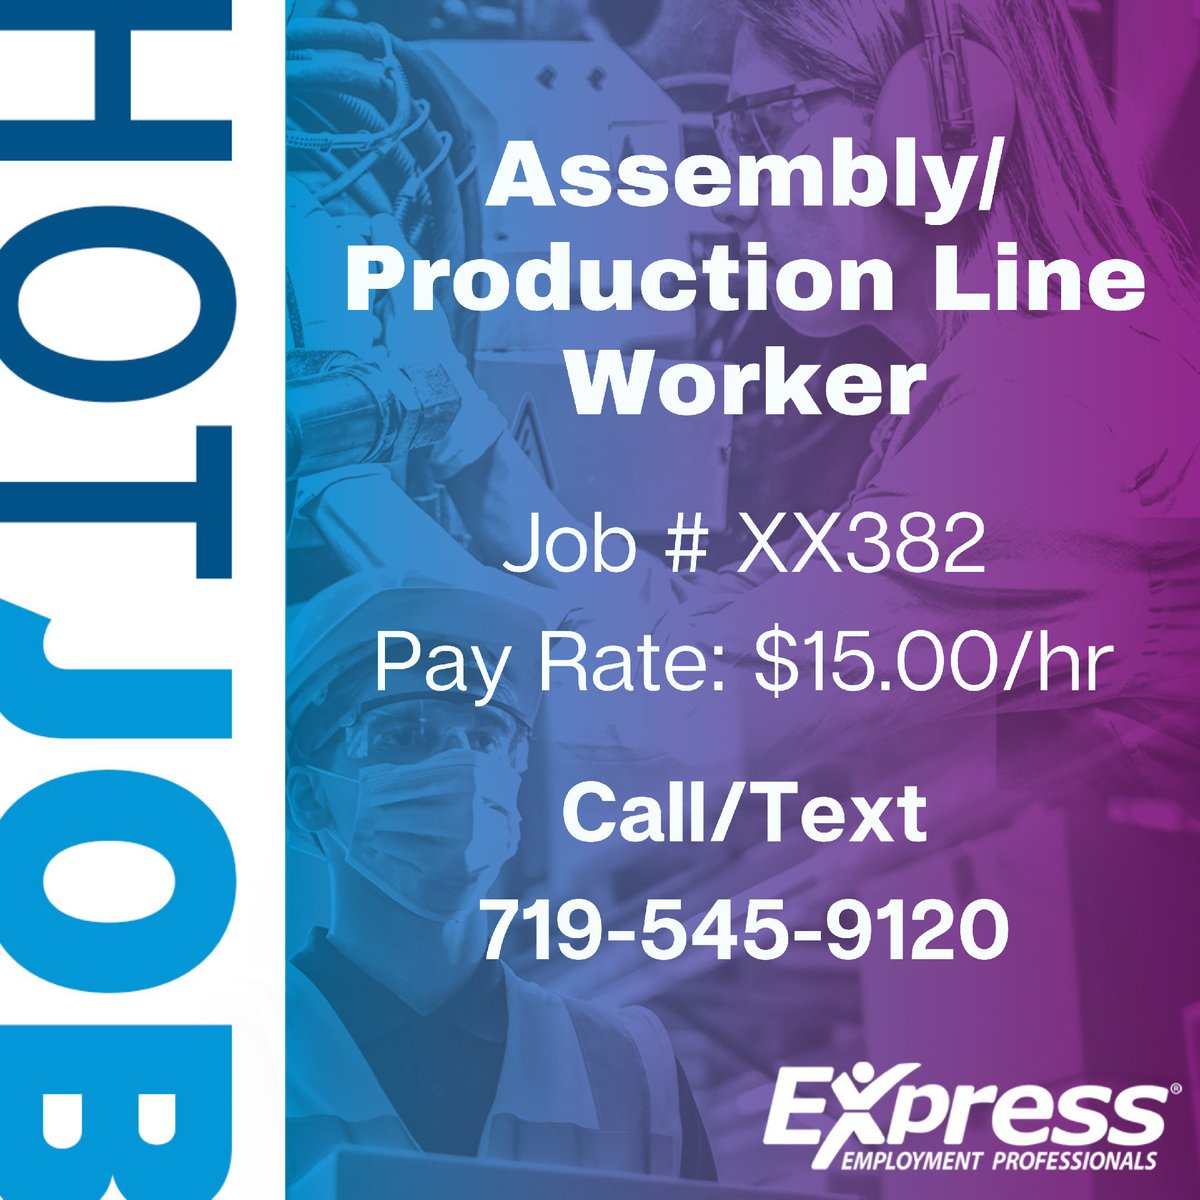 JOB ALERT - Production Line Worker - starting at $15.00/hr.
Please call/text 719-545-9120
**Pueblo Industrial Park!
tinyurl.com/2p8rkkmp

#ExpressPros #PuebloJobs #NowHiring #PuebloCo